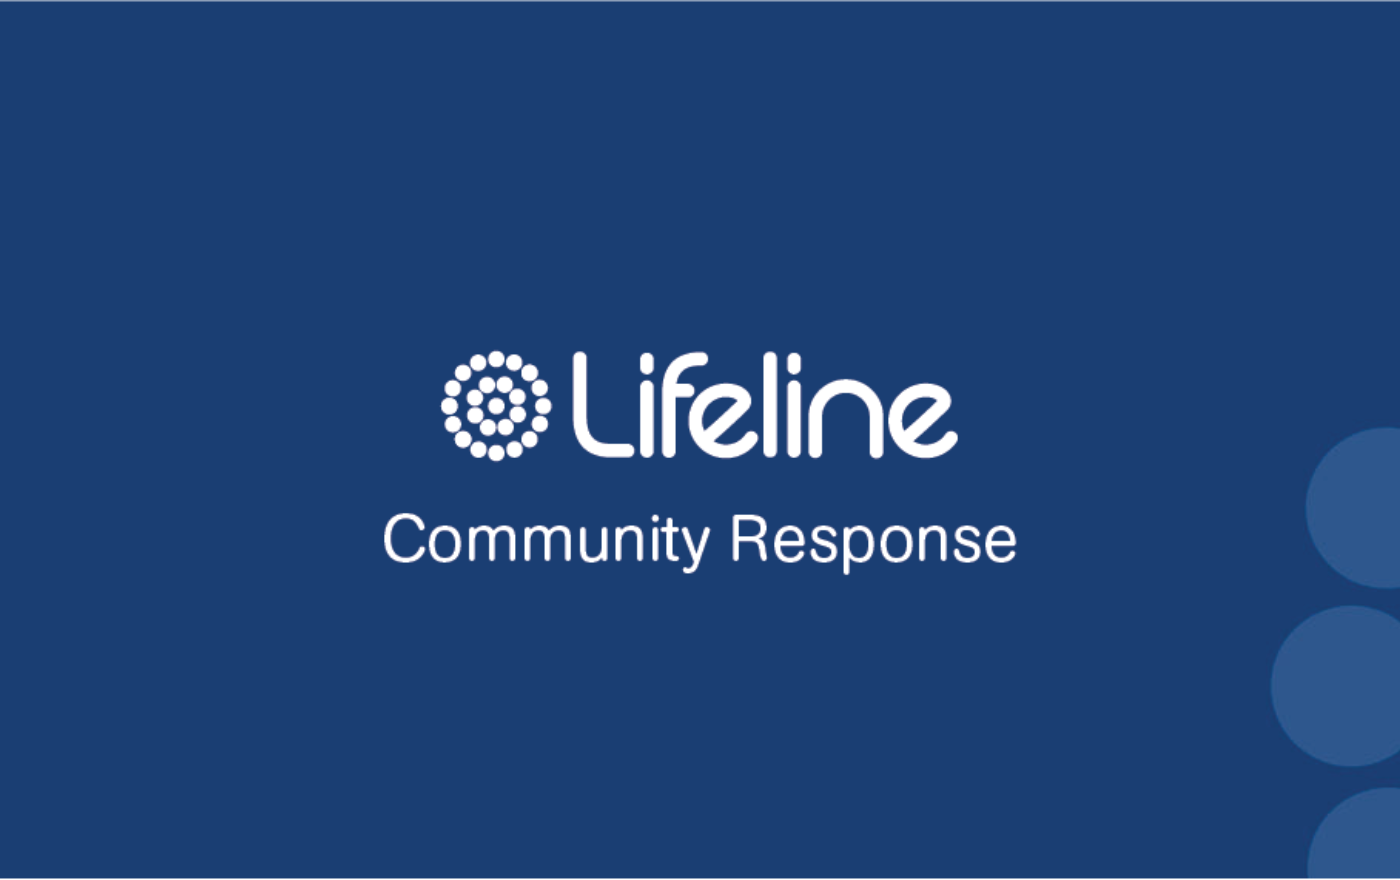 Community Response Tile